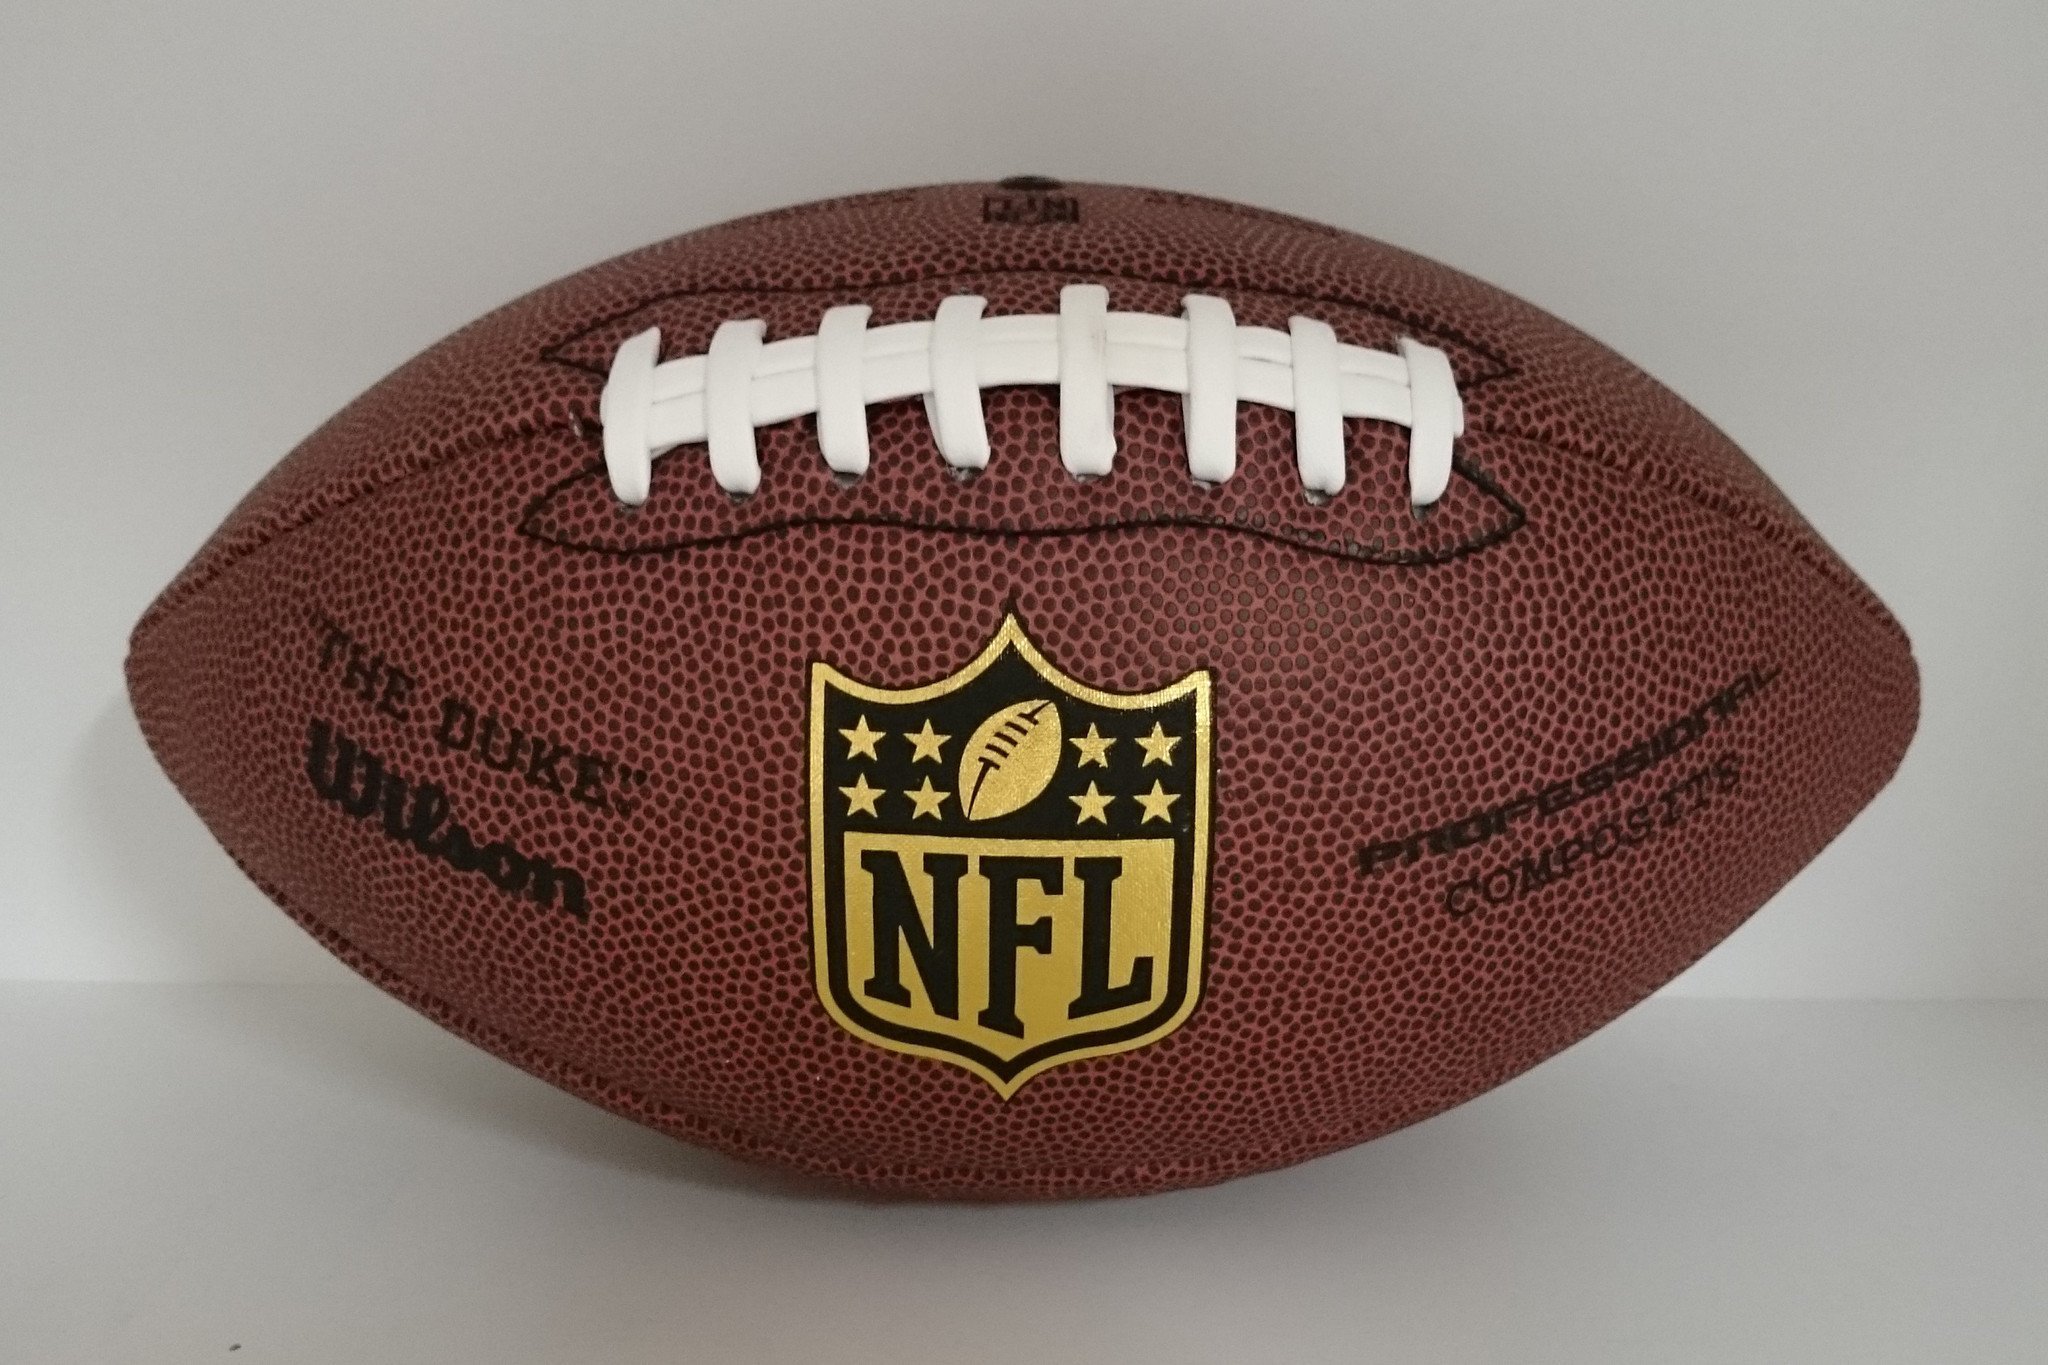 NEW Wilson Duke Replica NFL Football (Gridiron Ball) 26388975501 | eBay